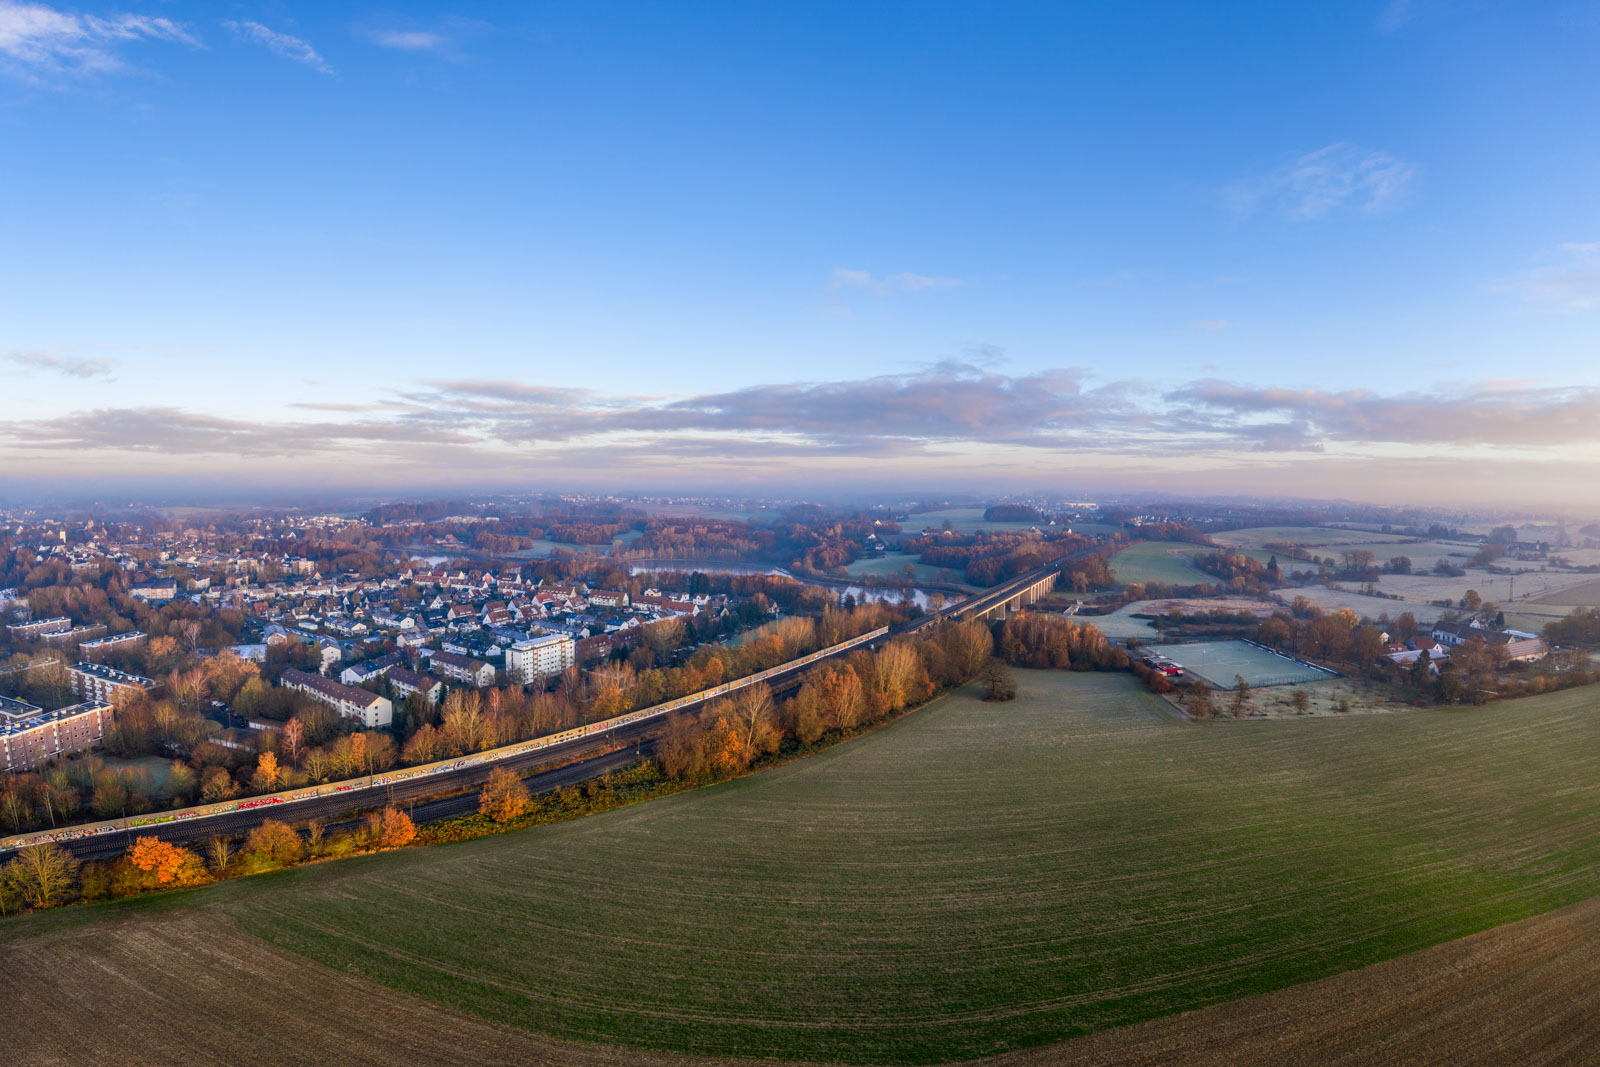 District 'Schildesche' from the air in November 2019.